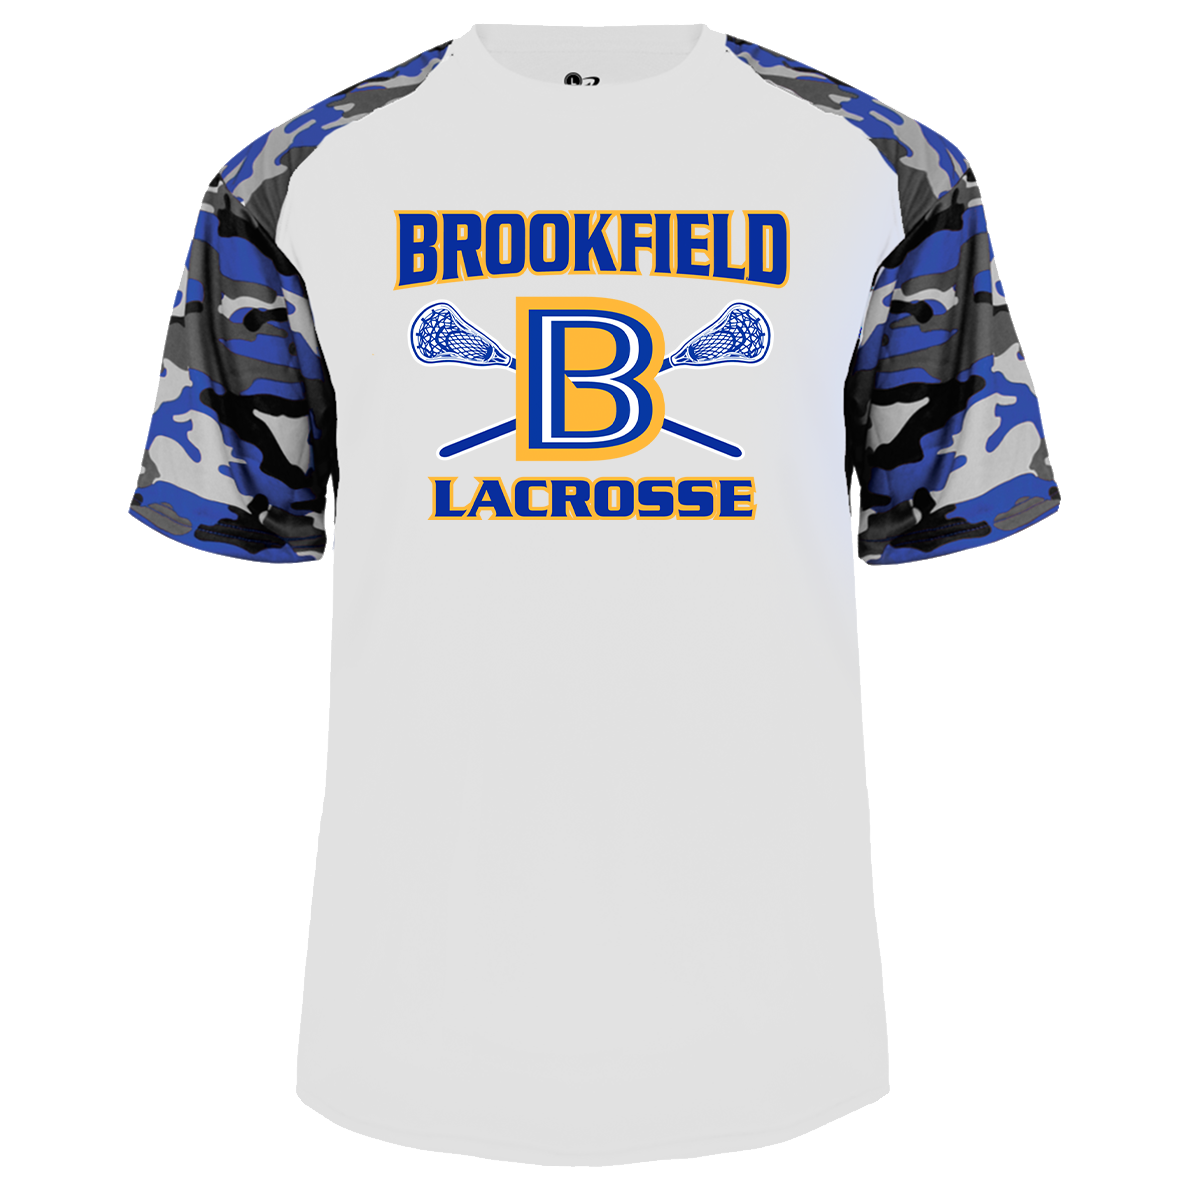 Brookfield Lacrosse Camo Sport tee